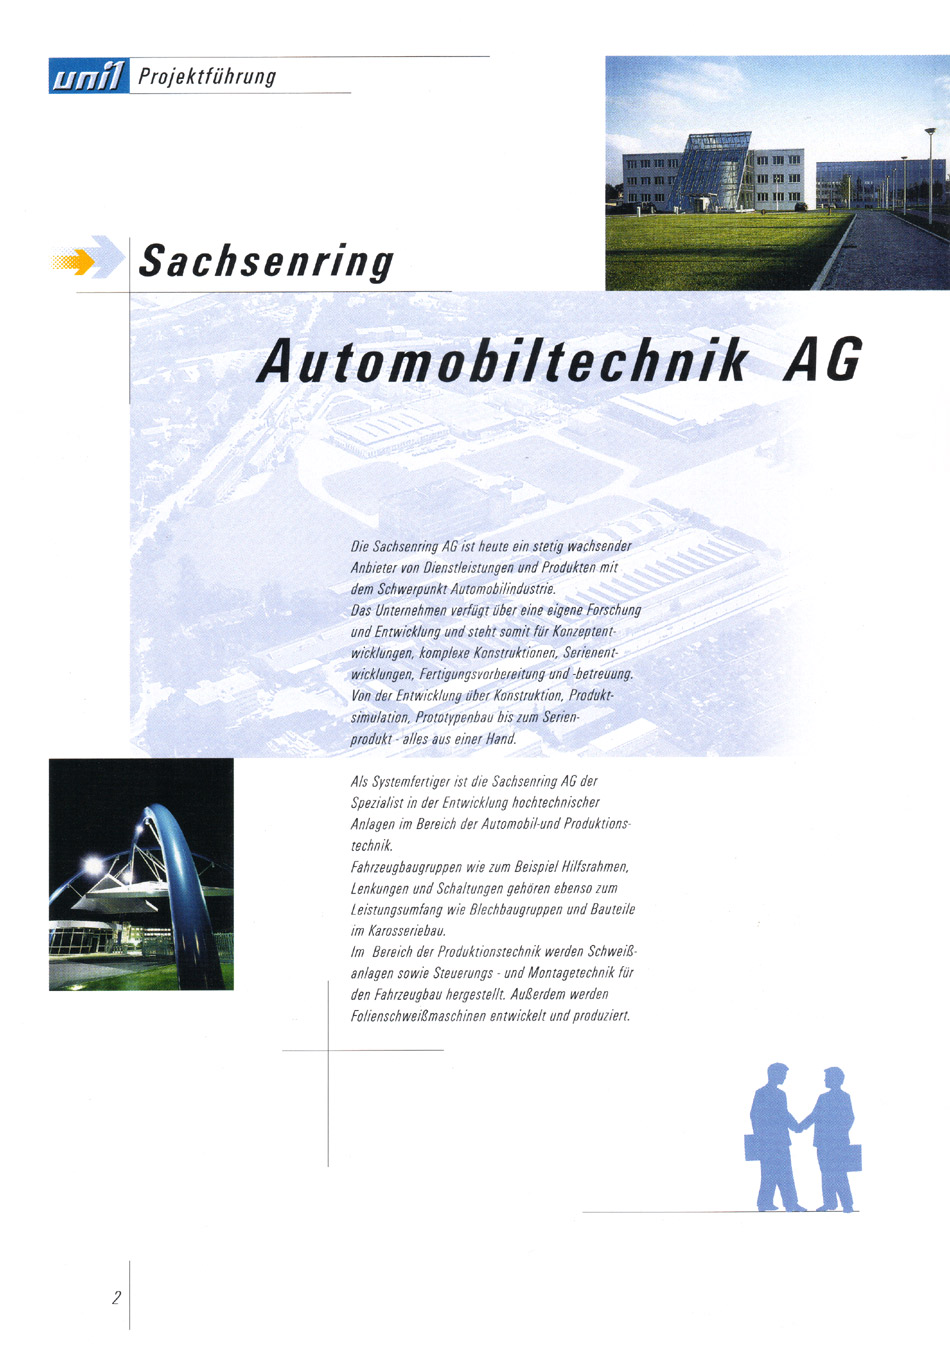 1997 - Sachsenring uni1 - Seite 2